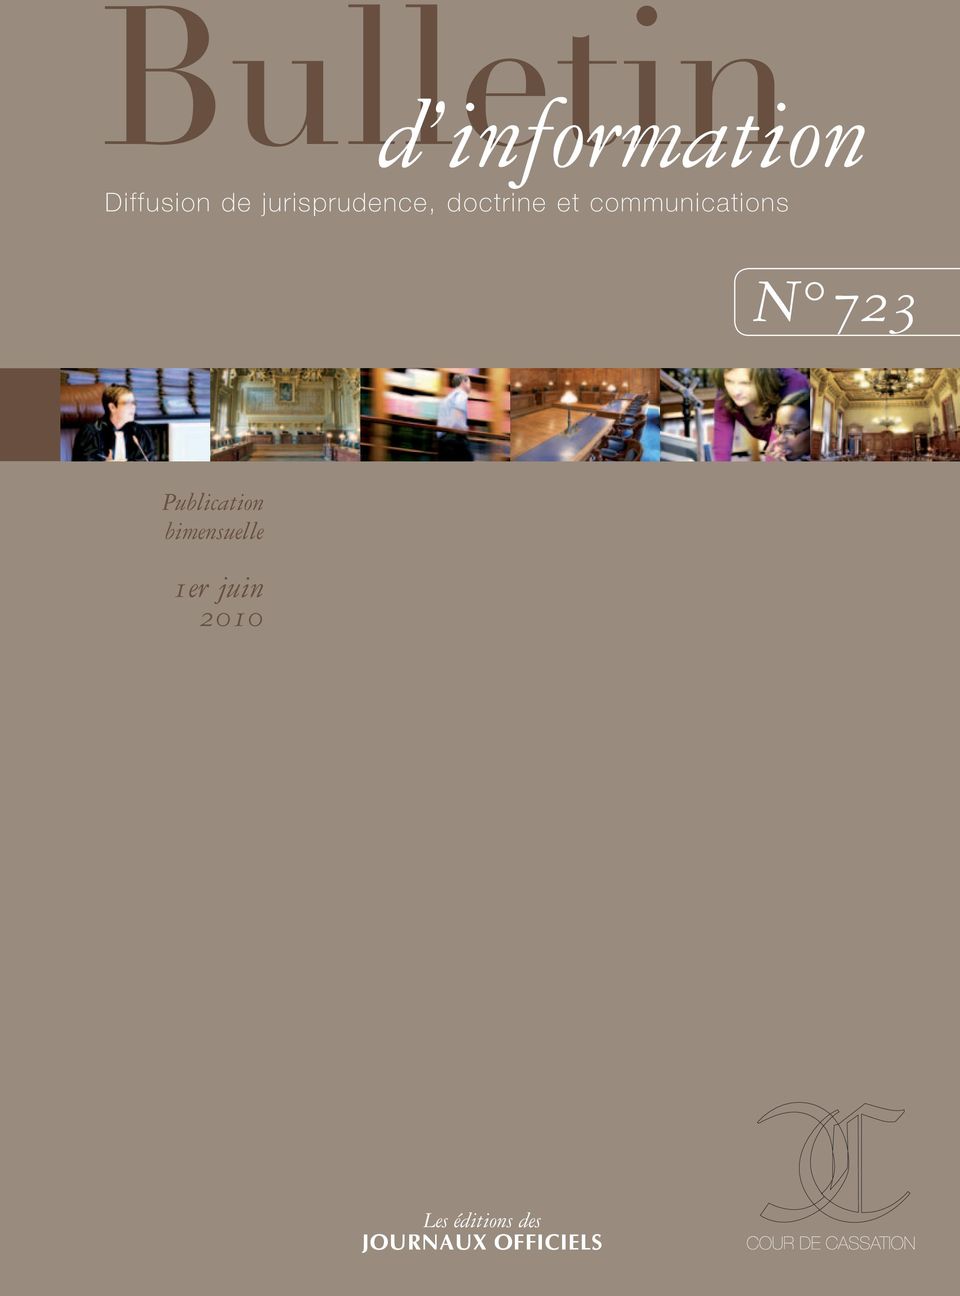 communications N 723 Publication